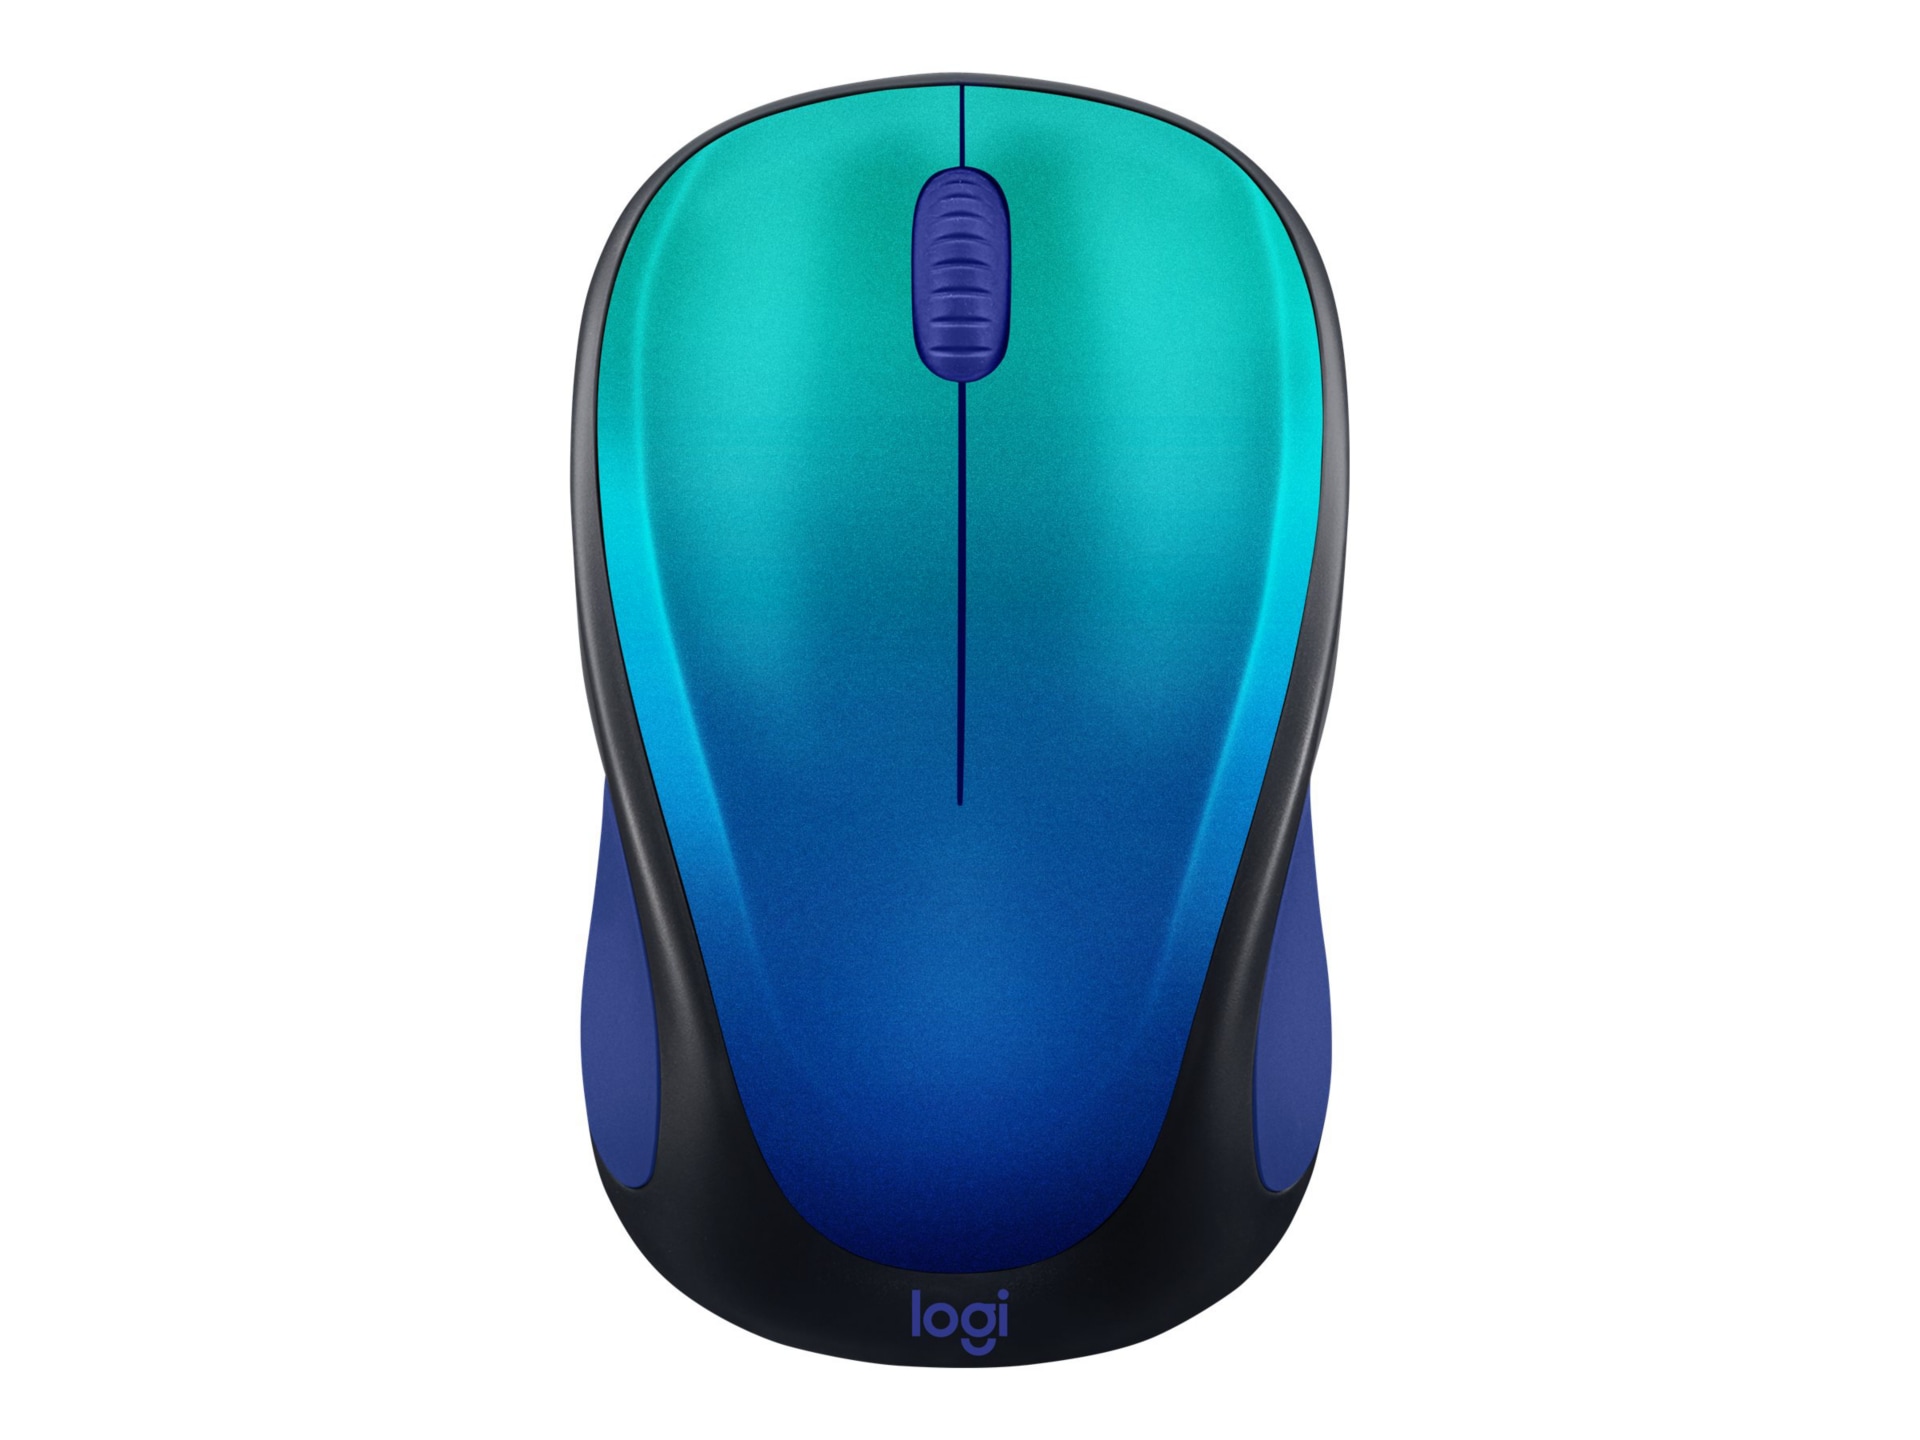 Logitech Design Collection - Limited Edition - mouse - 2.4 GHz - aurora blue